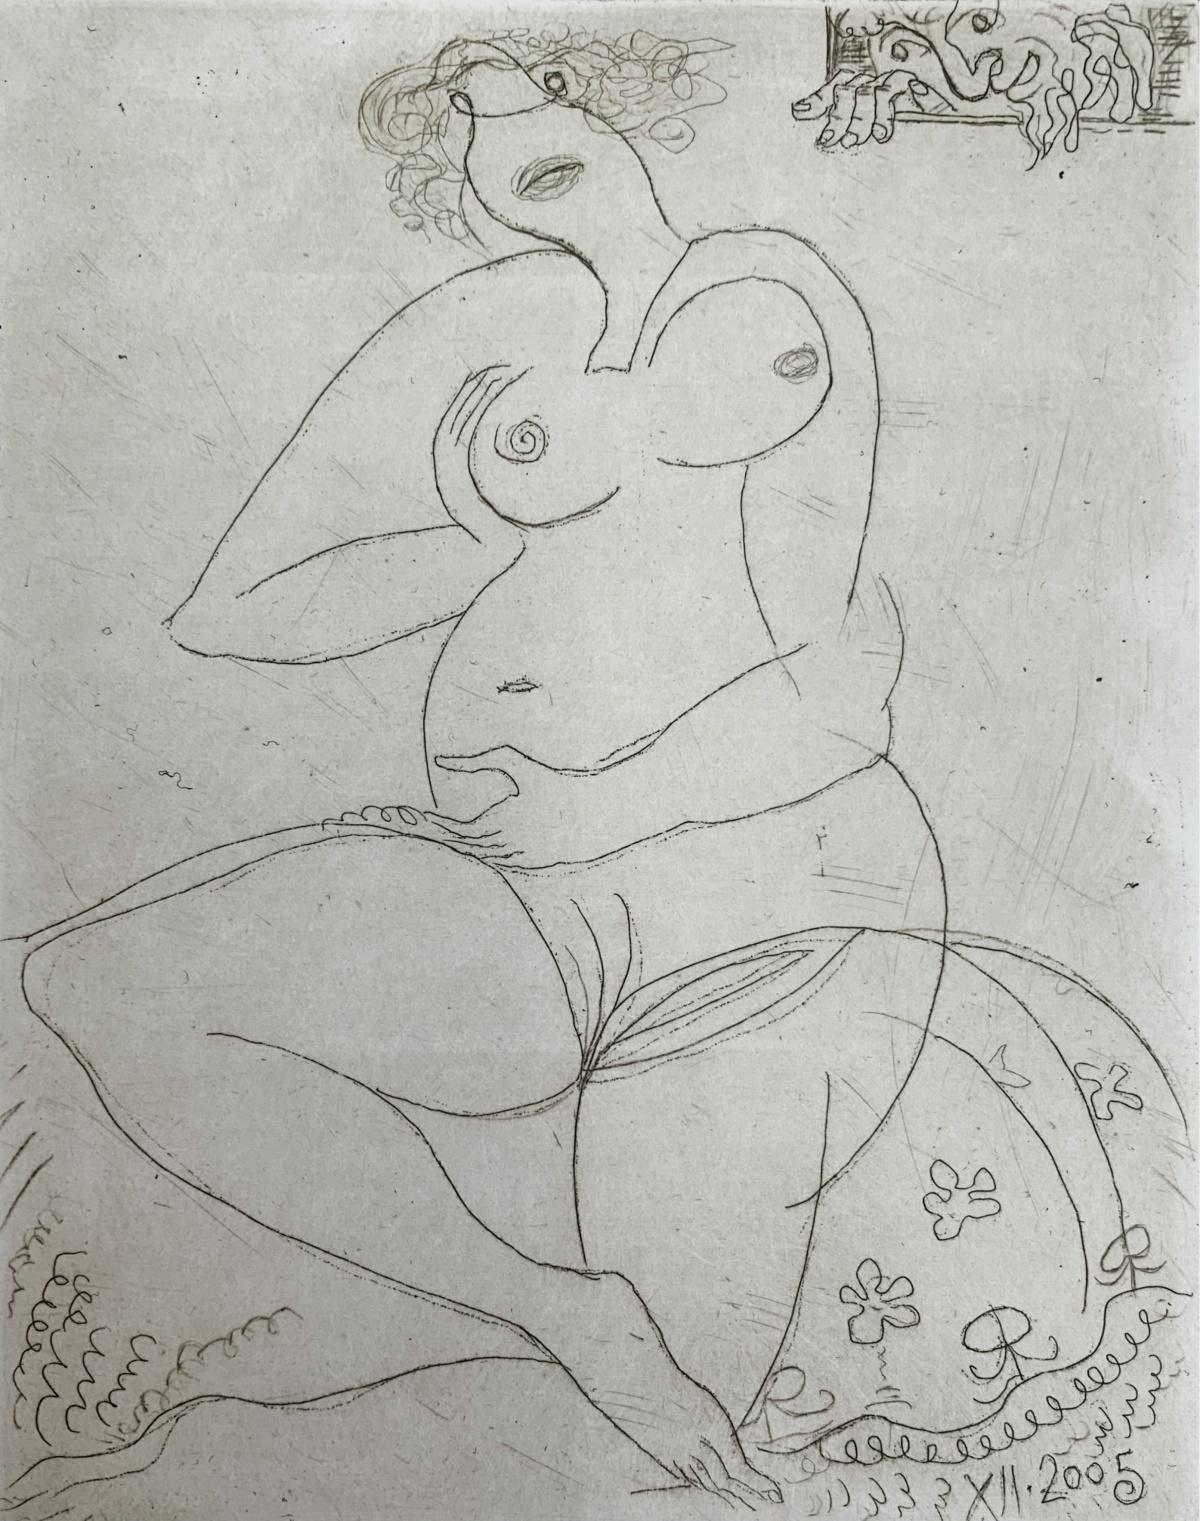 Jeune femme - XXIe siècle, gravure à l'eau-forte figurative, nu